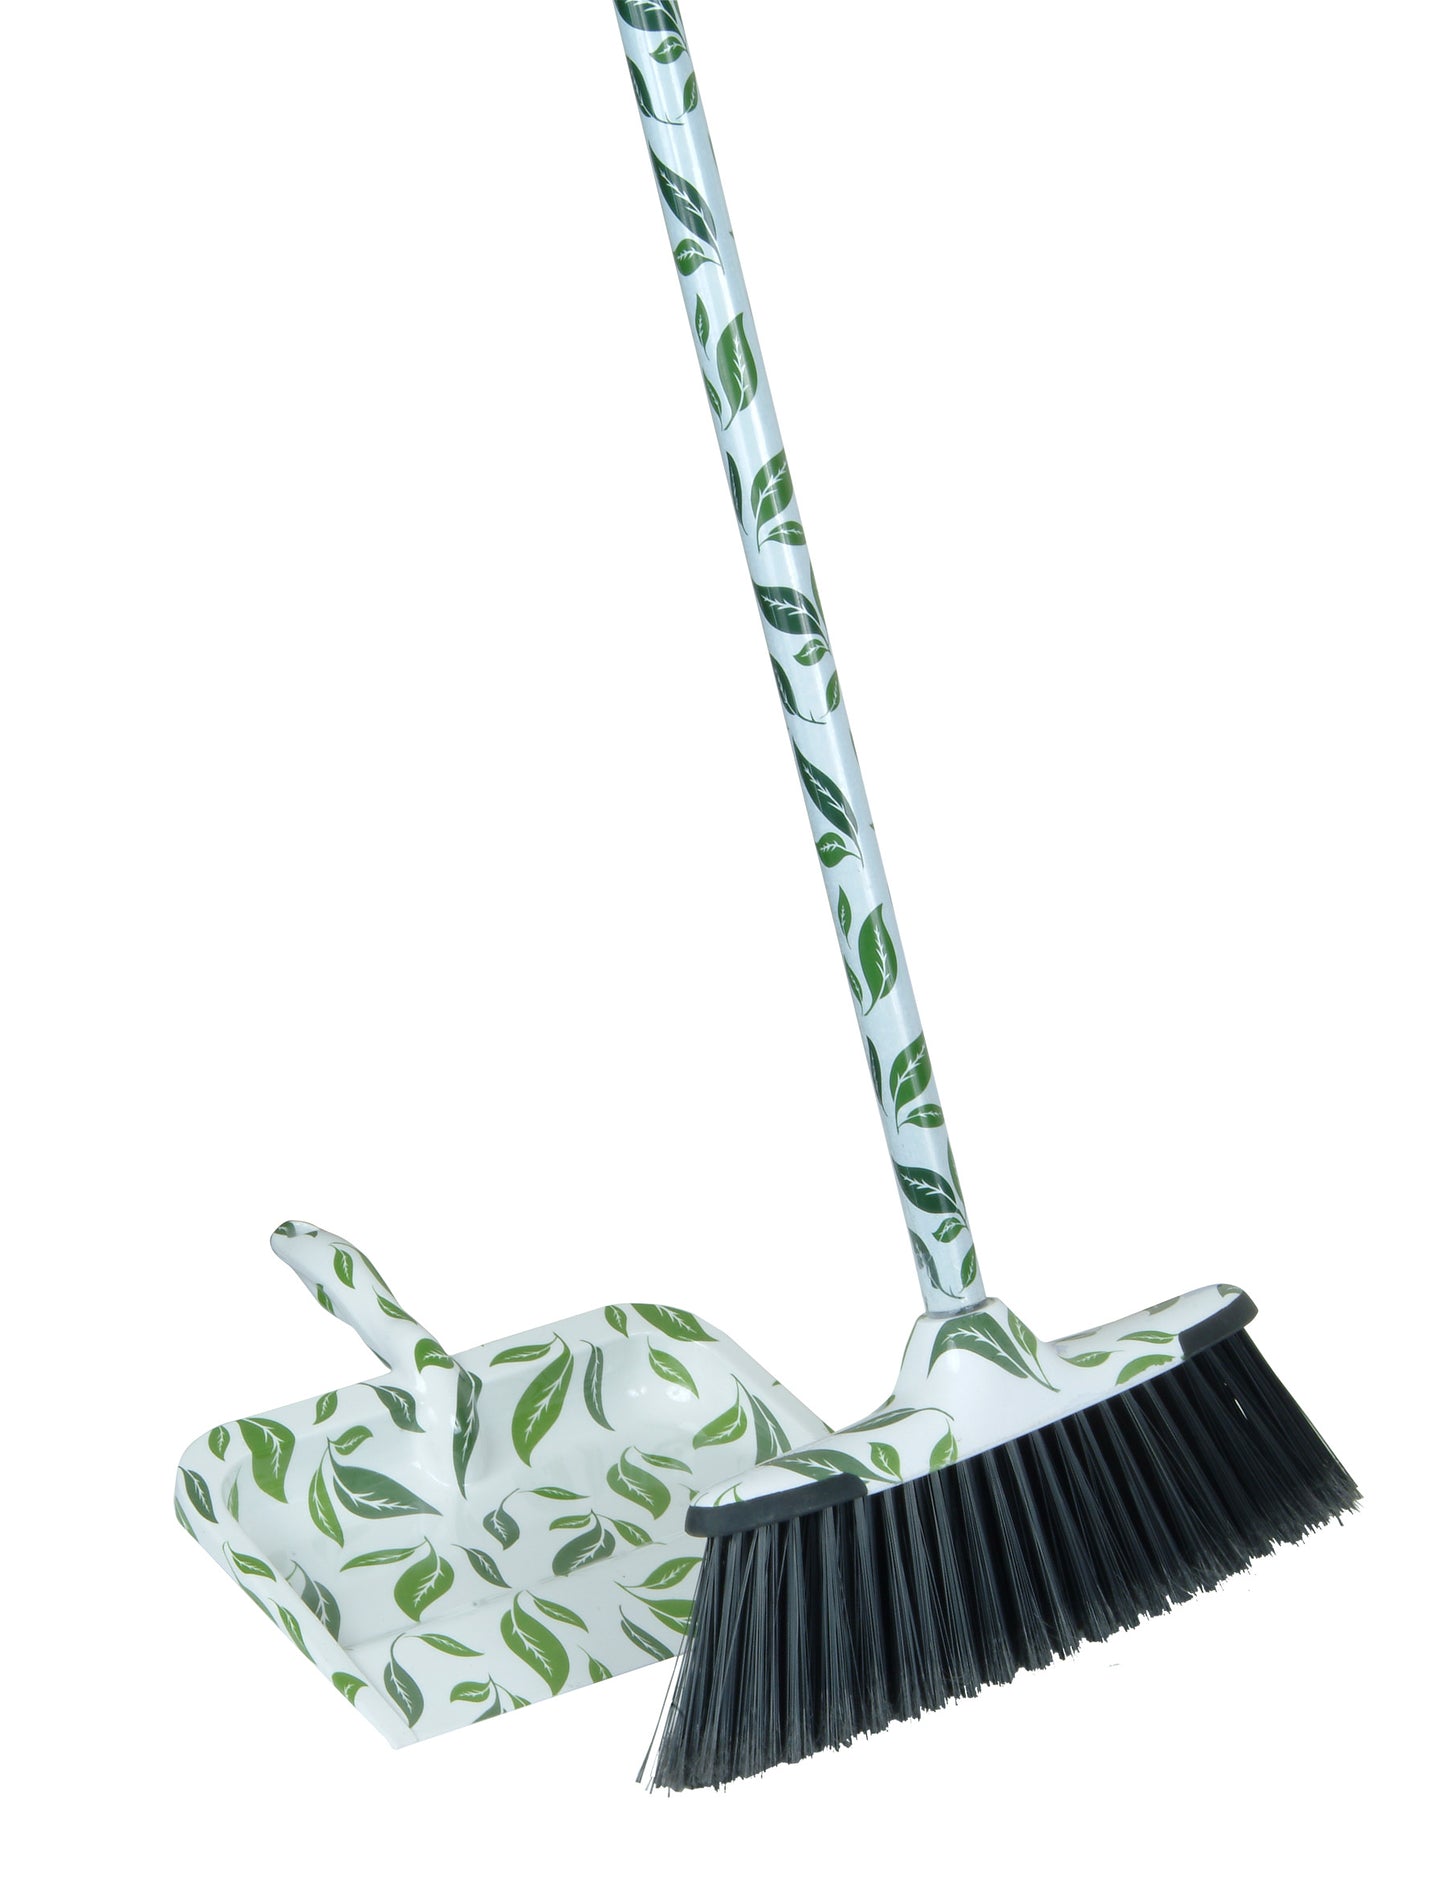 Green/White Leaf Design Broom With Metal Handle.